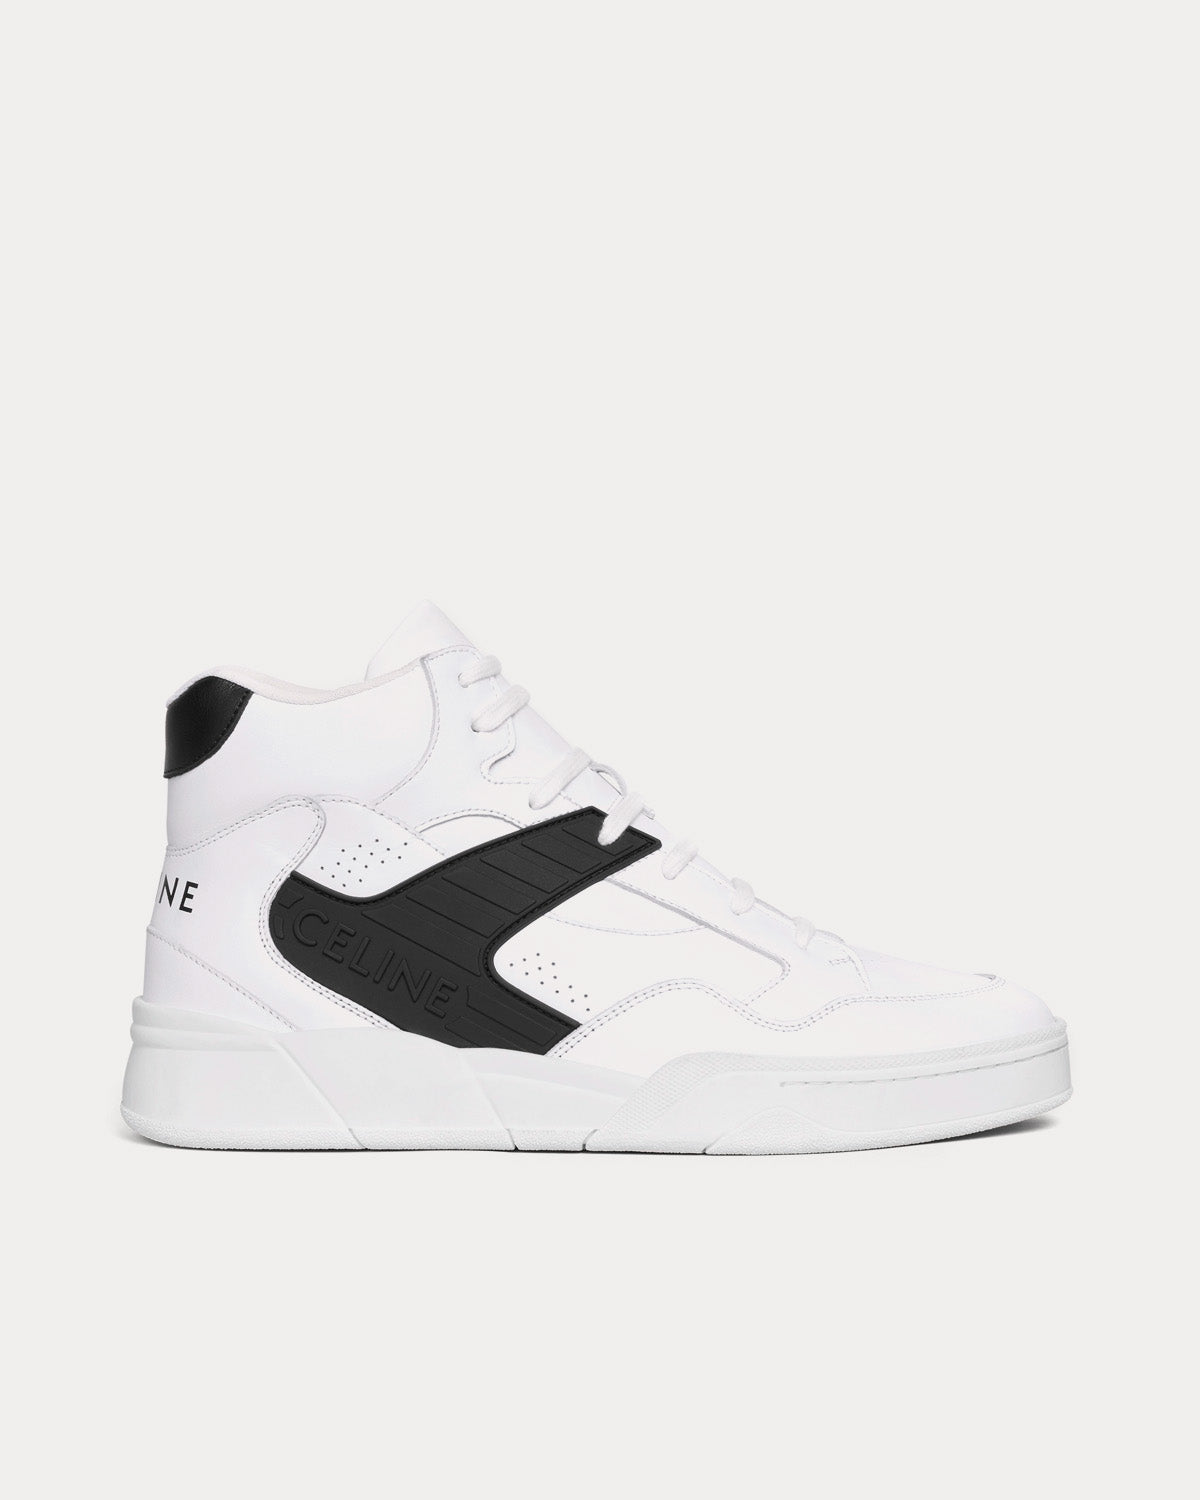 Celine - CT-06 Calfskin & Laminated Calfskin Optic White / Black High Top Sneakers